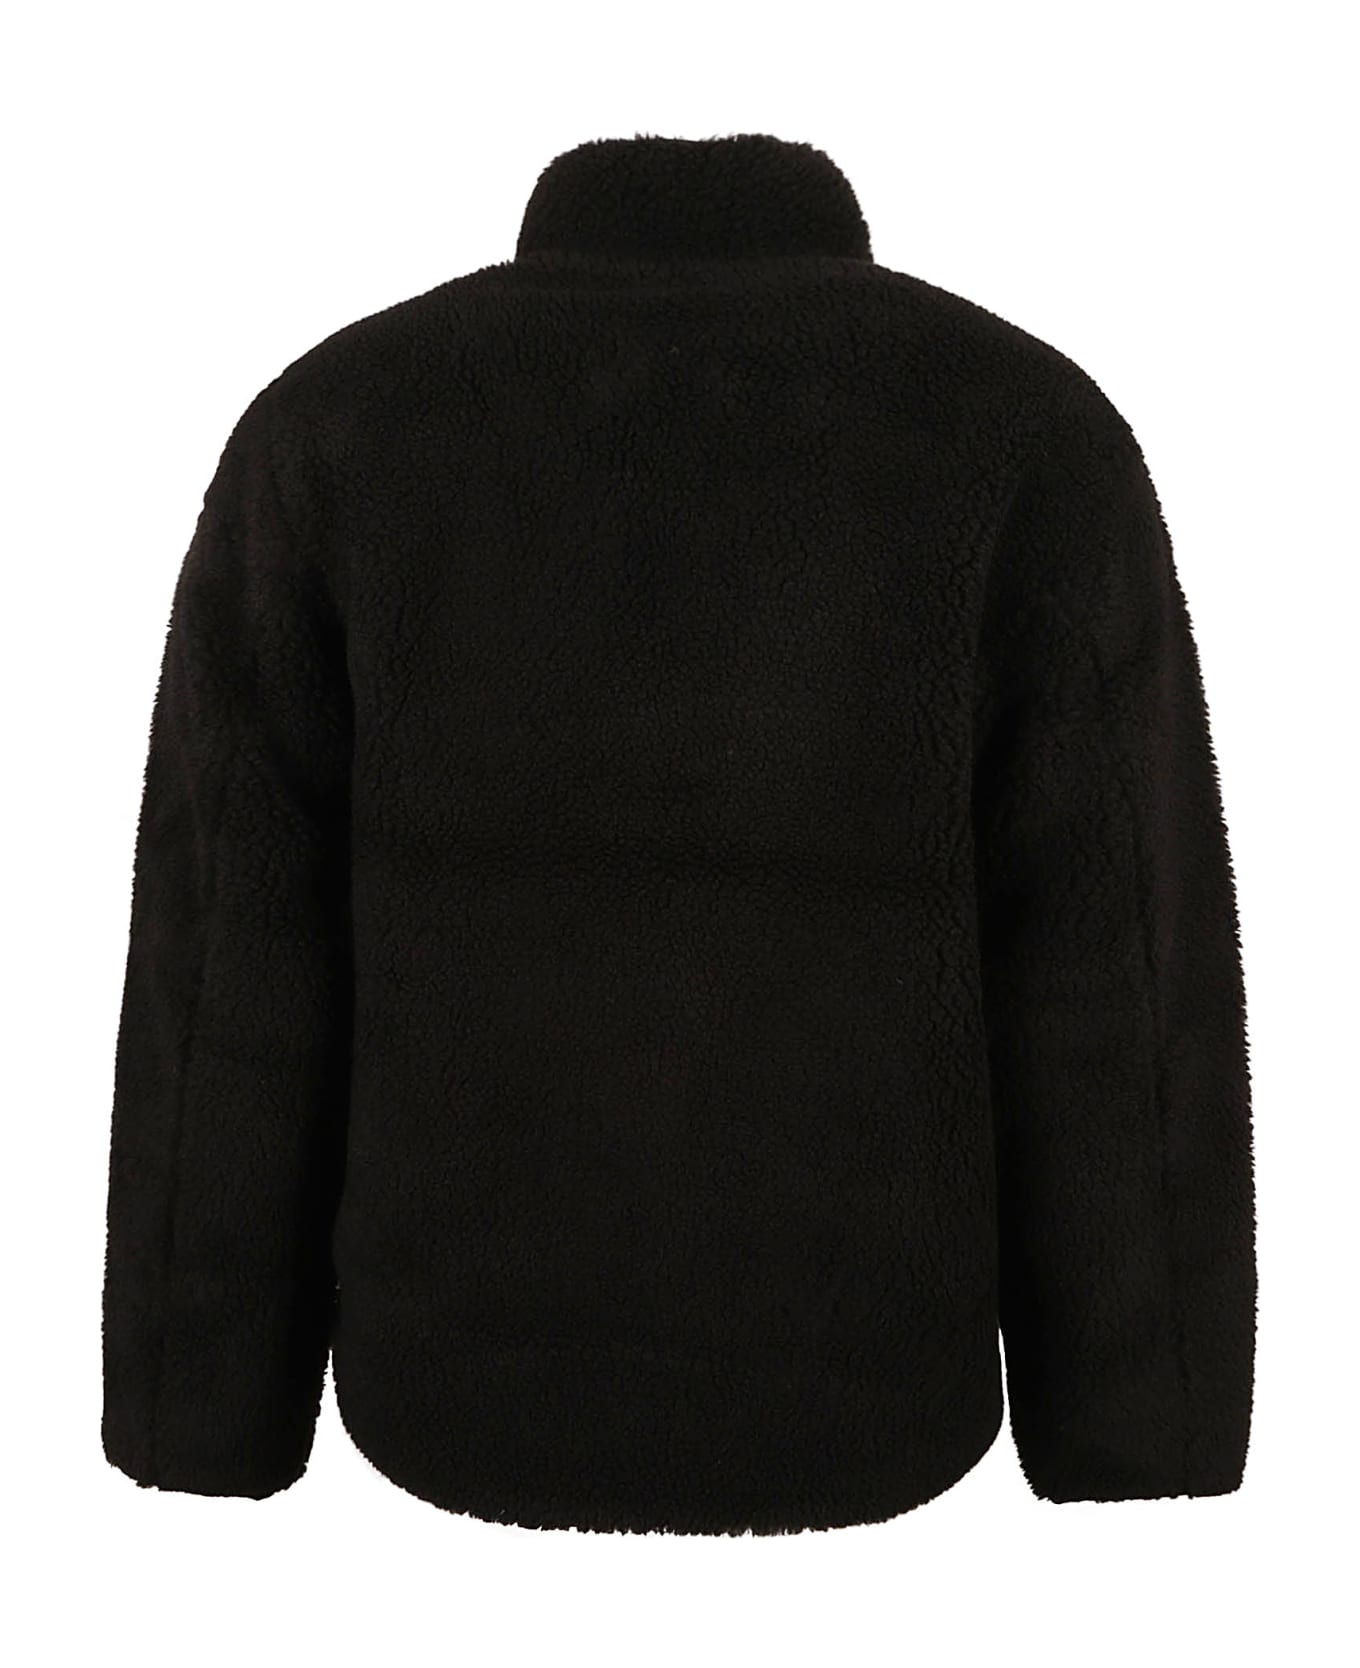 REPRESENT Standing Collar Zipped Fur Jacket - Jet Black